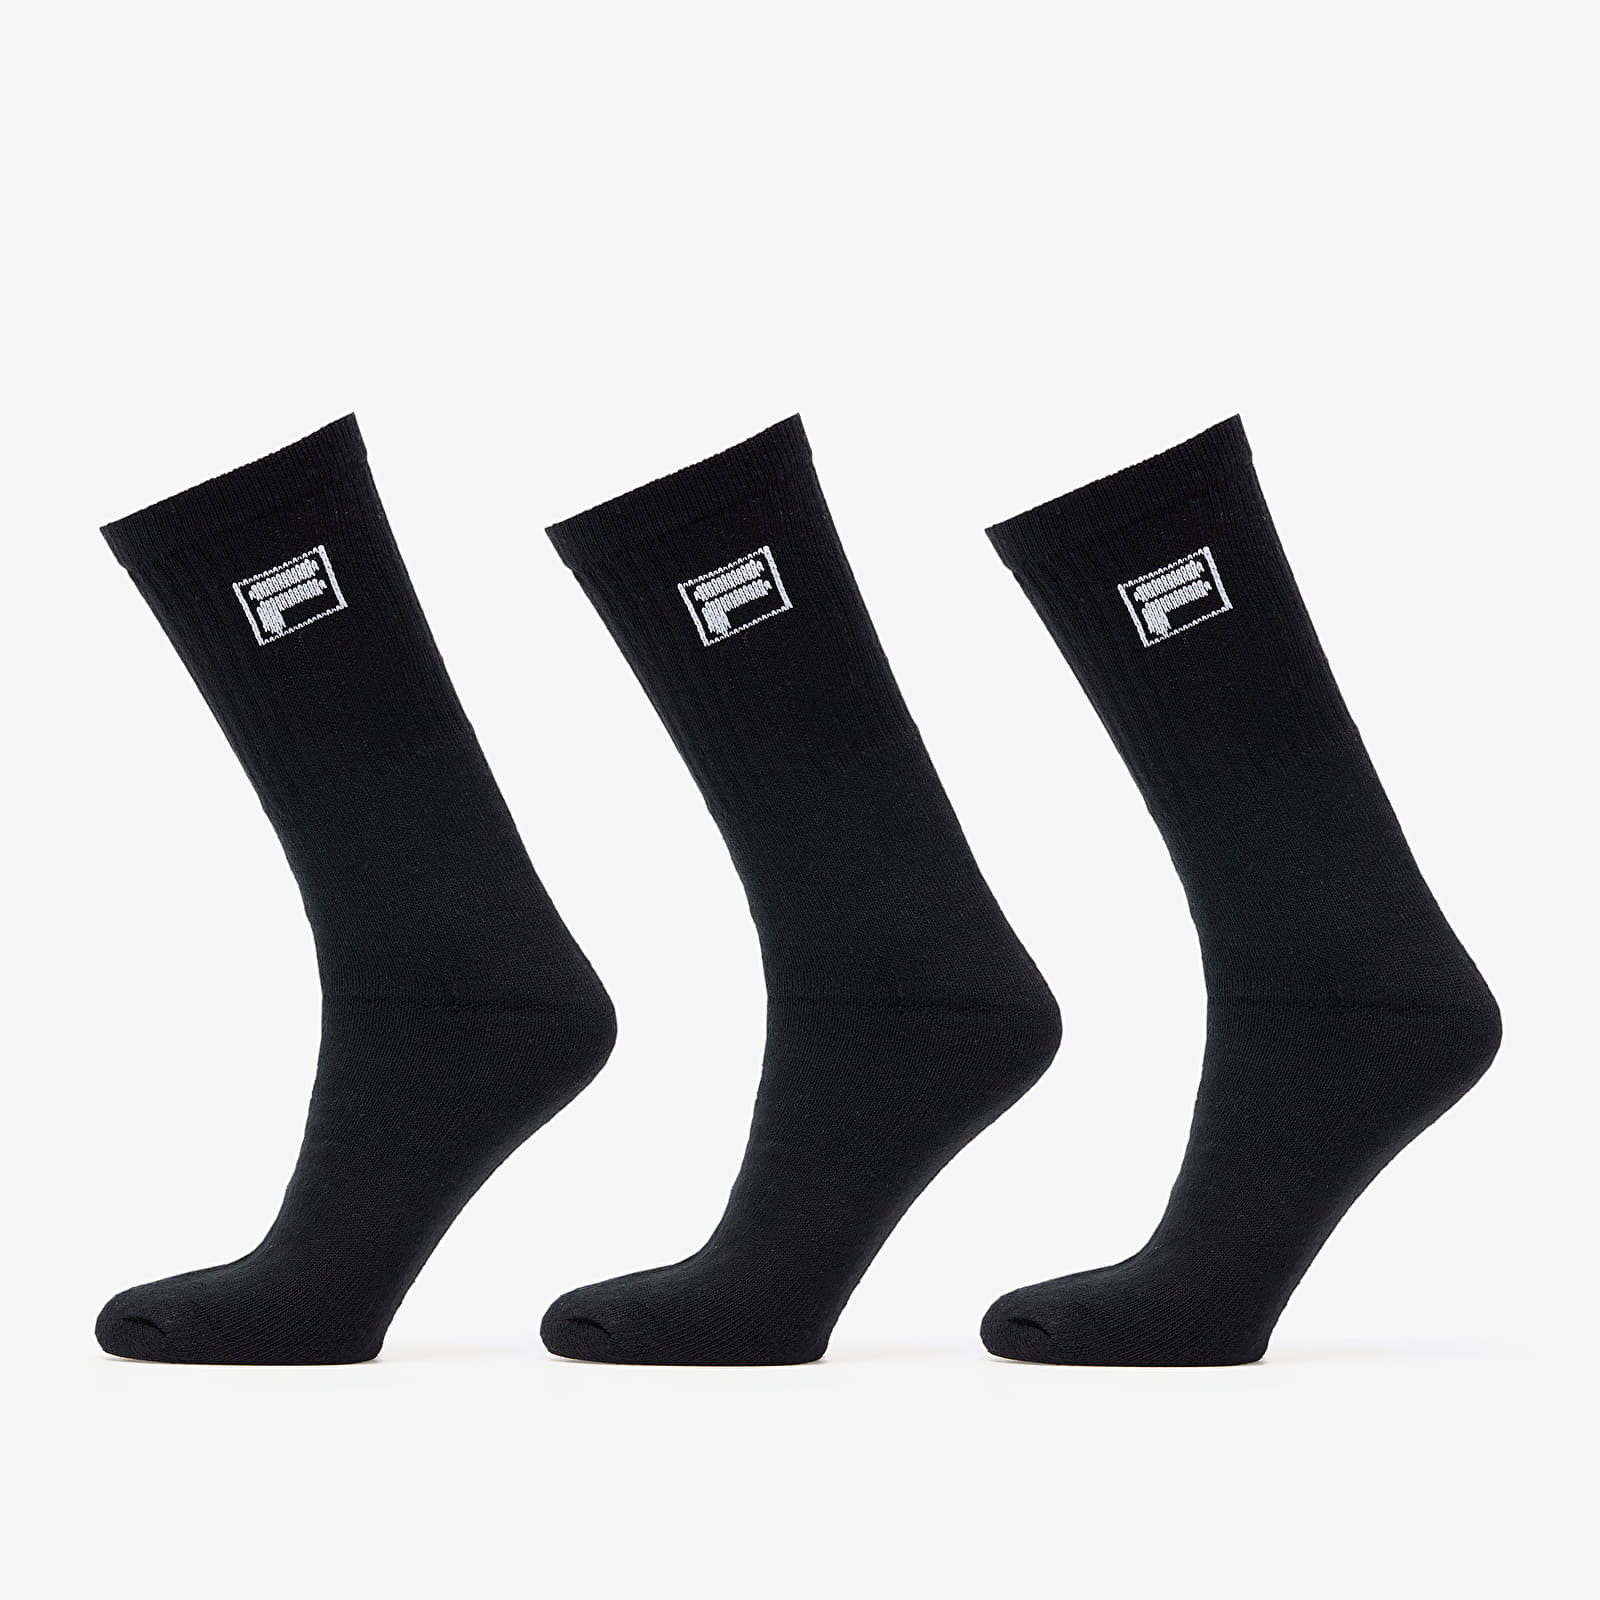 Calzetti FILA Socks 3-Pack Black